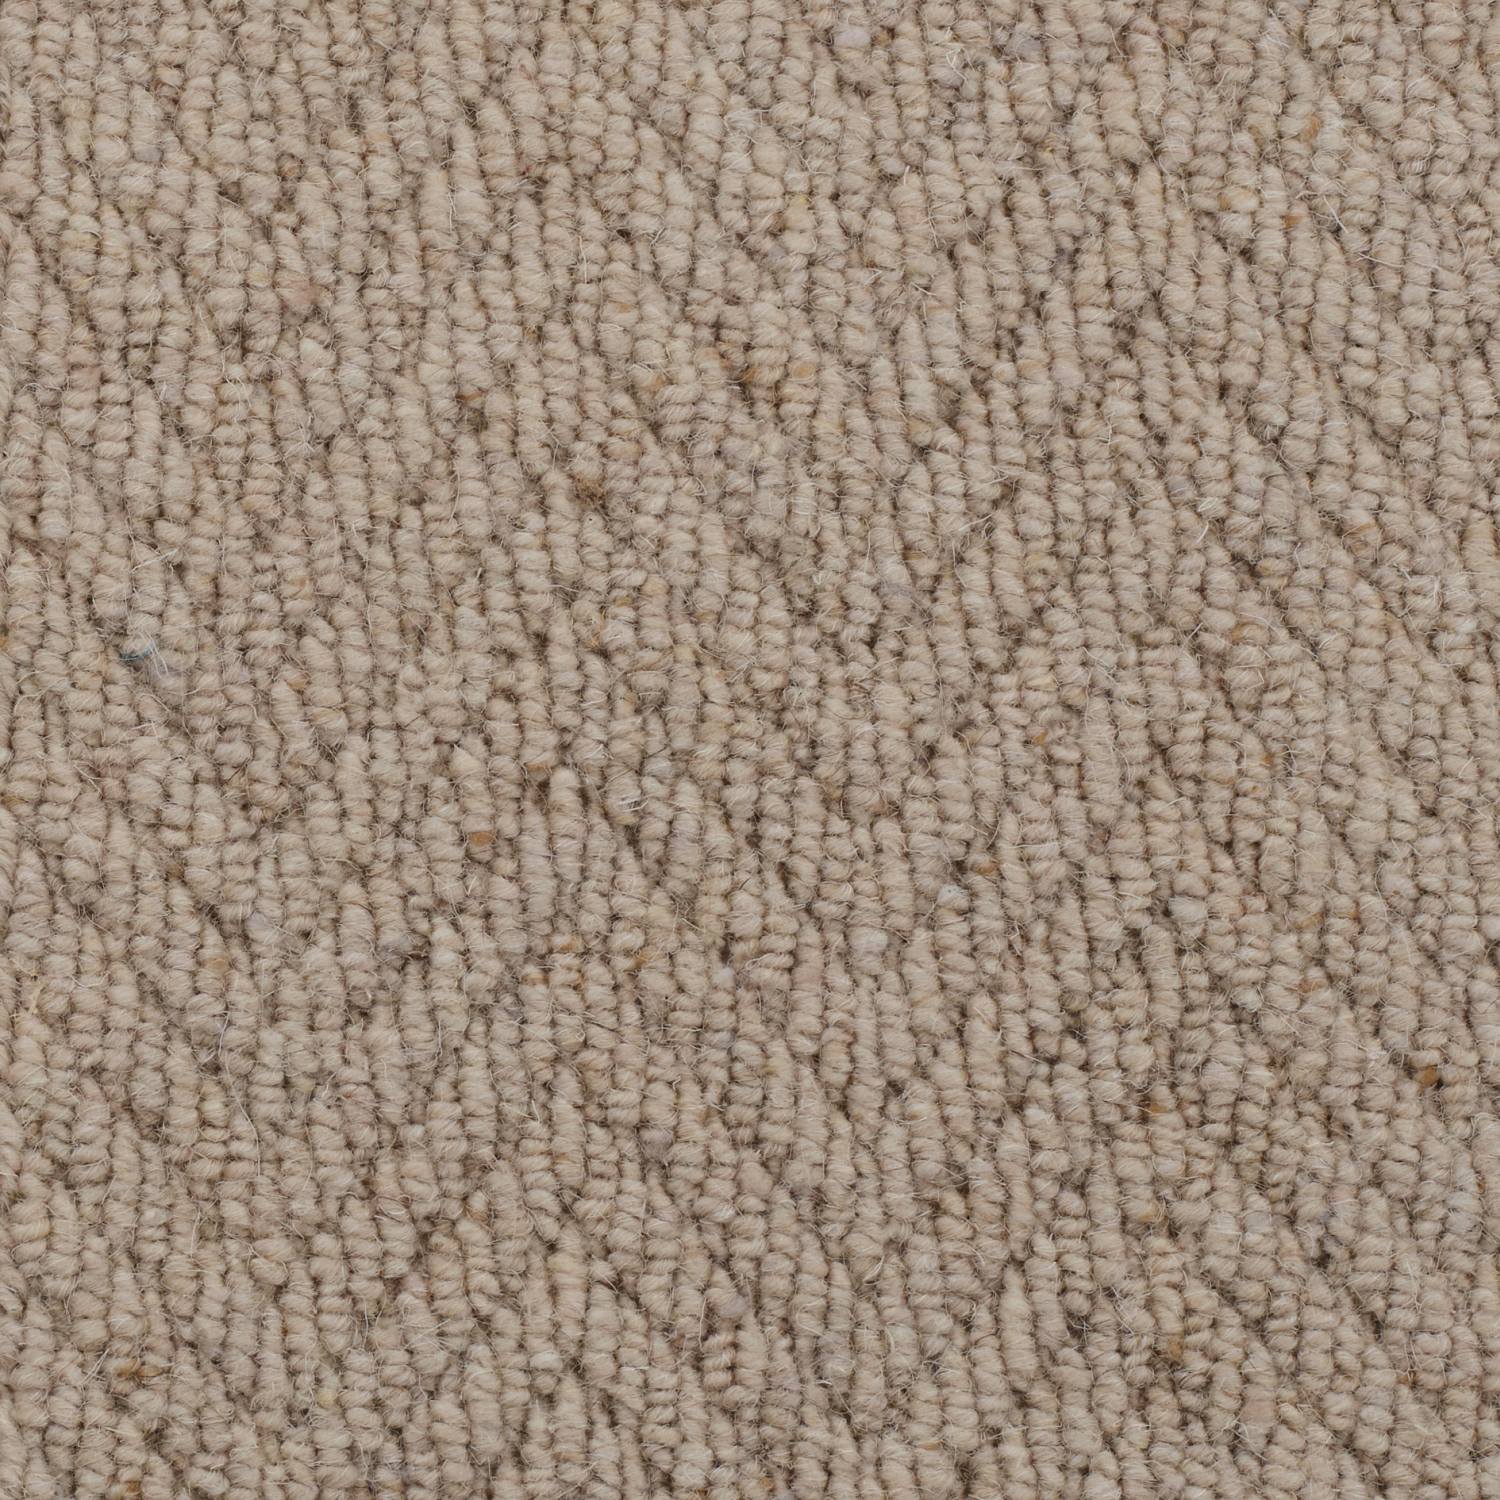 Natural Origins Loop Wool Carpet - Oxford Tones Herringbone